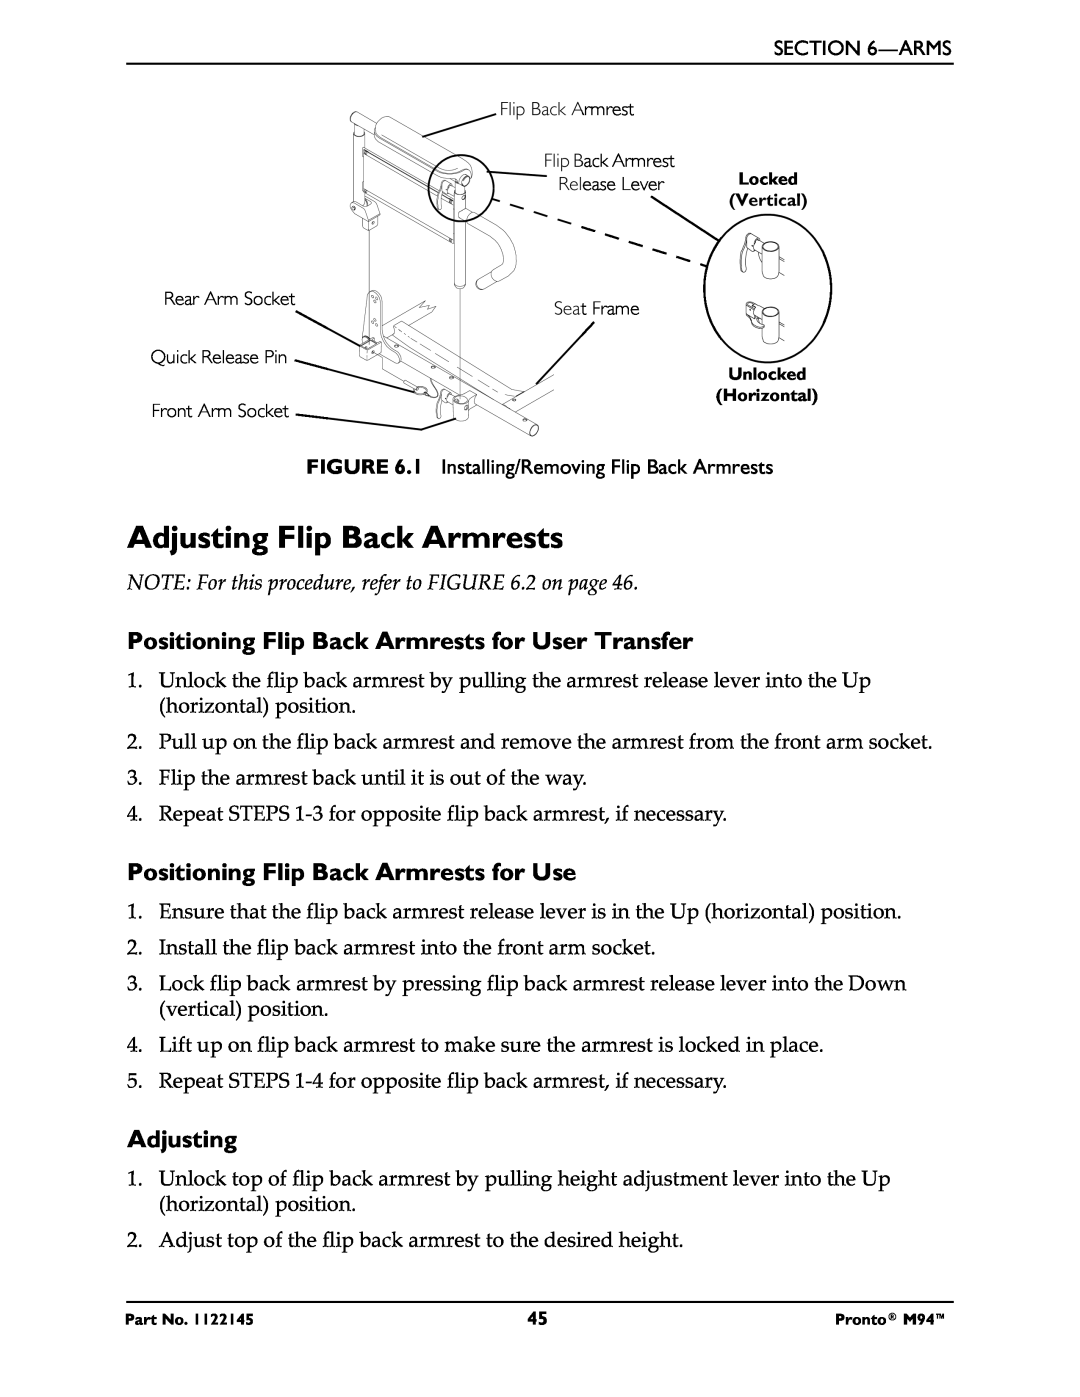 Invacare Pronto M71 manual Adjusting Flip Back Armrests, Positioning Flip Back Armrests for User Transfer 